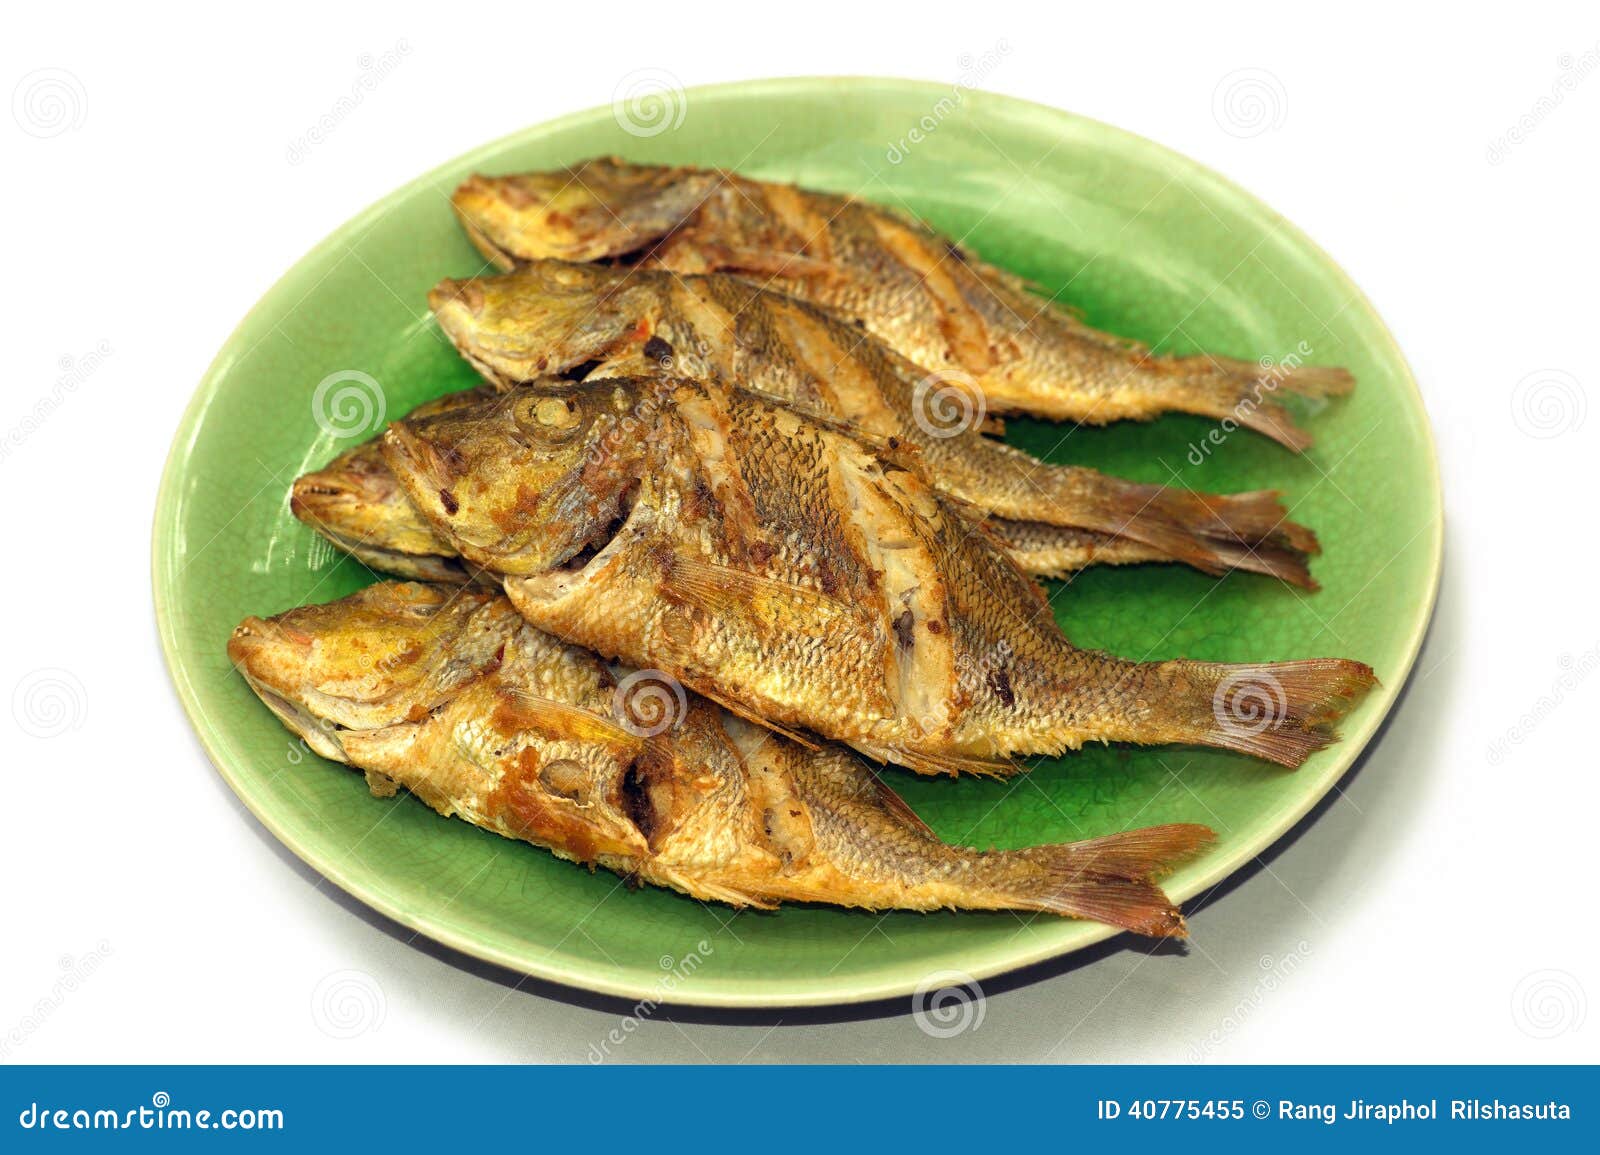 fried fish on white background.